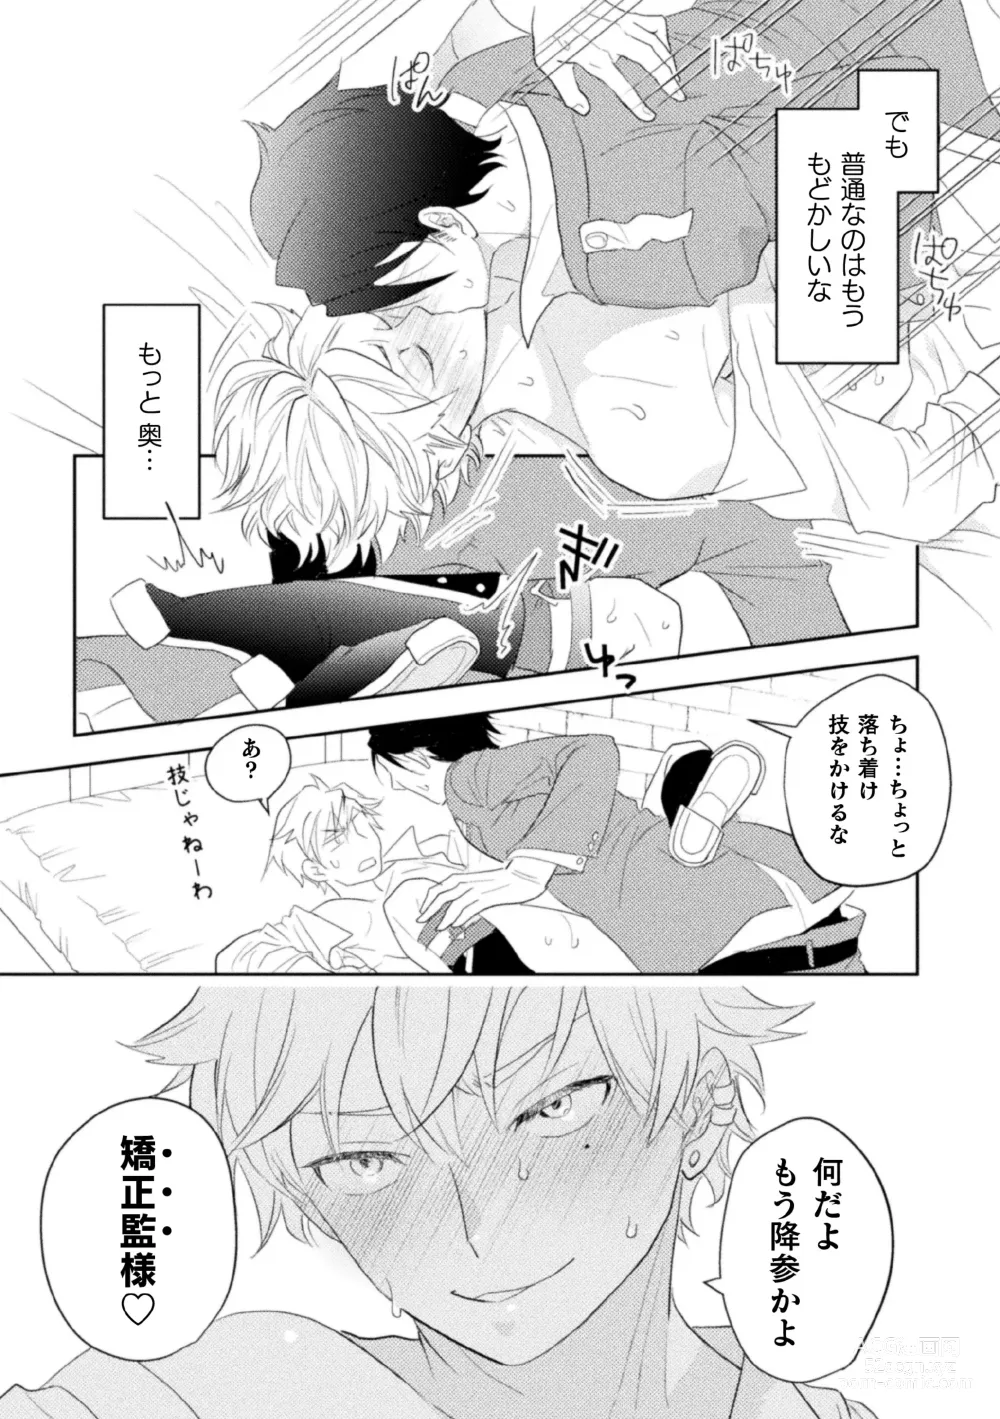 Page 37 of manga Zekkai Rougoku 4 Zekkai no Ori to Inma no Wana